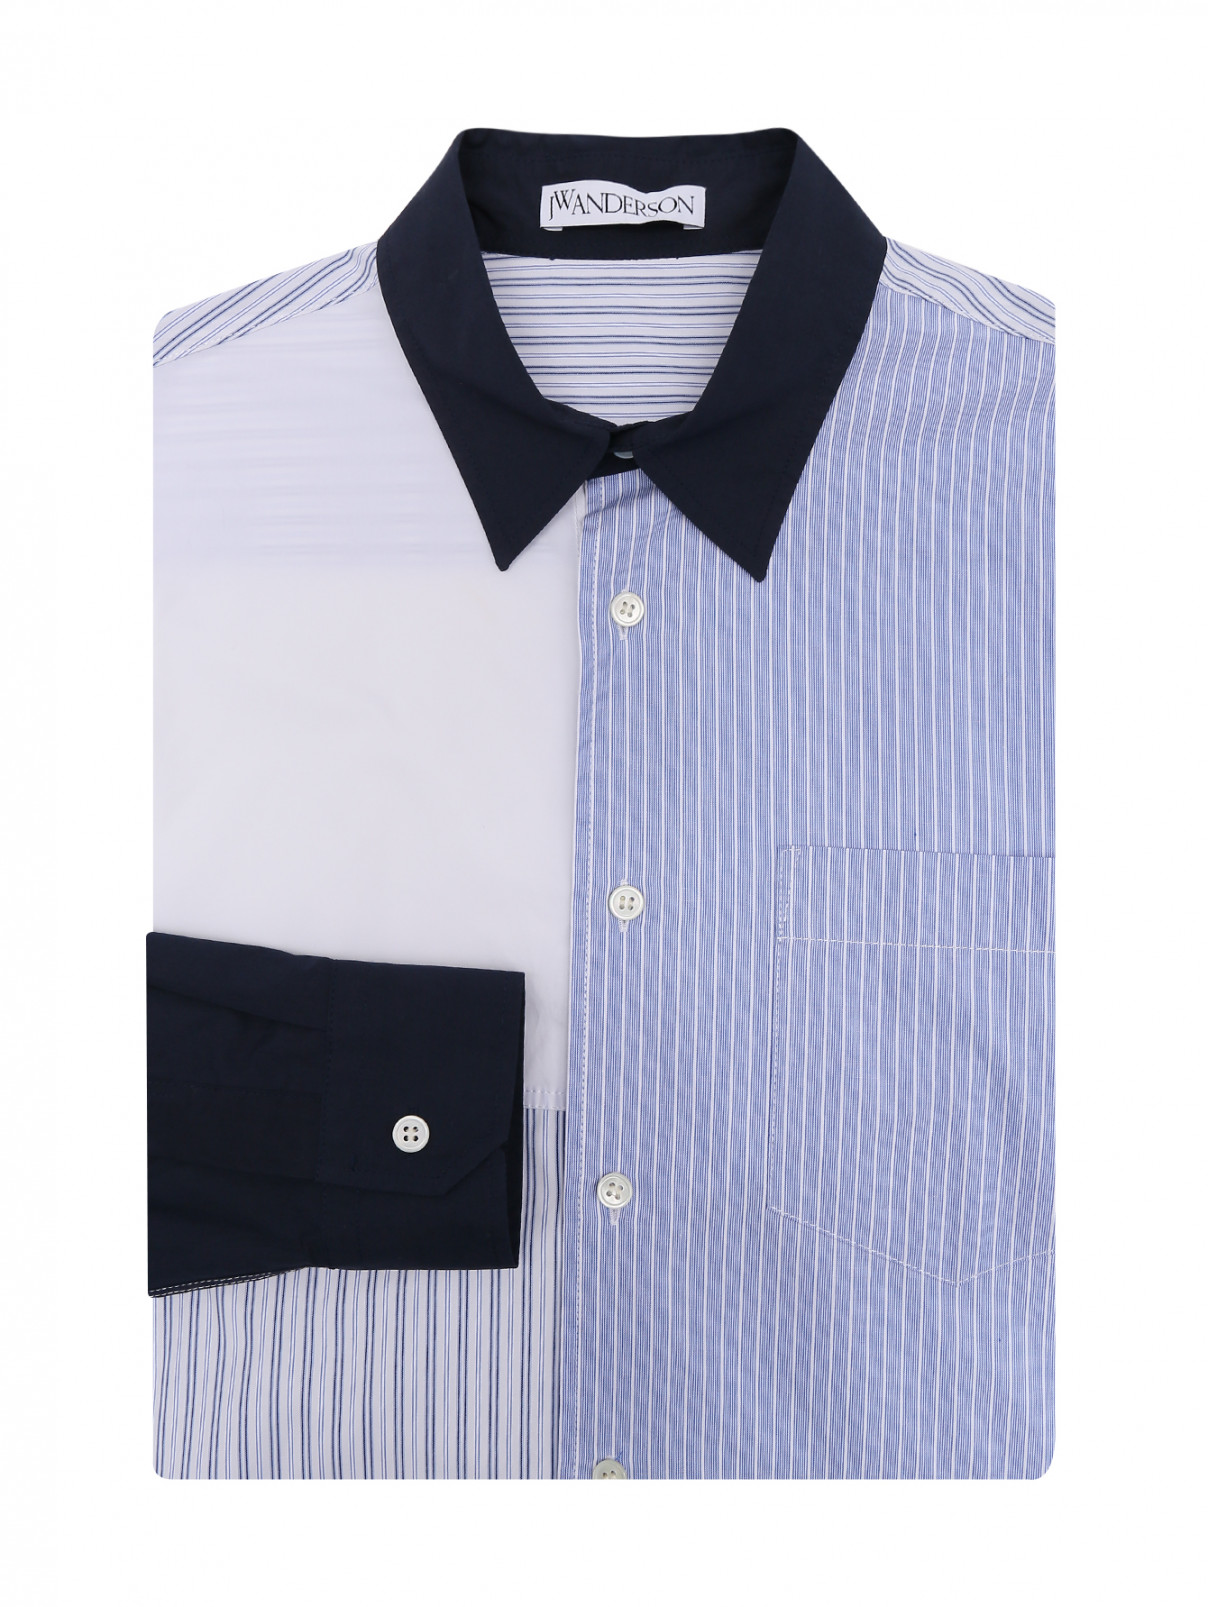 Рубашка из хлопка с узором J.W. Anderson  –  Общий вид  – Цвет:  Синий